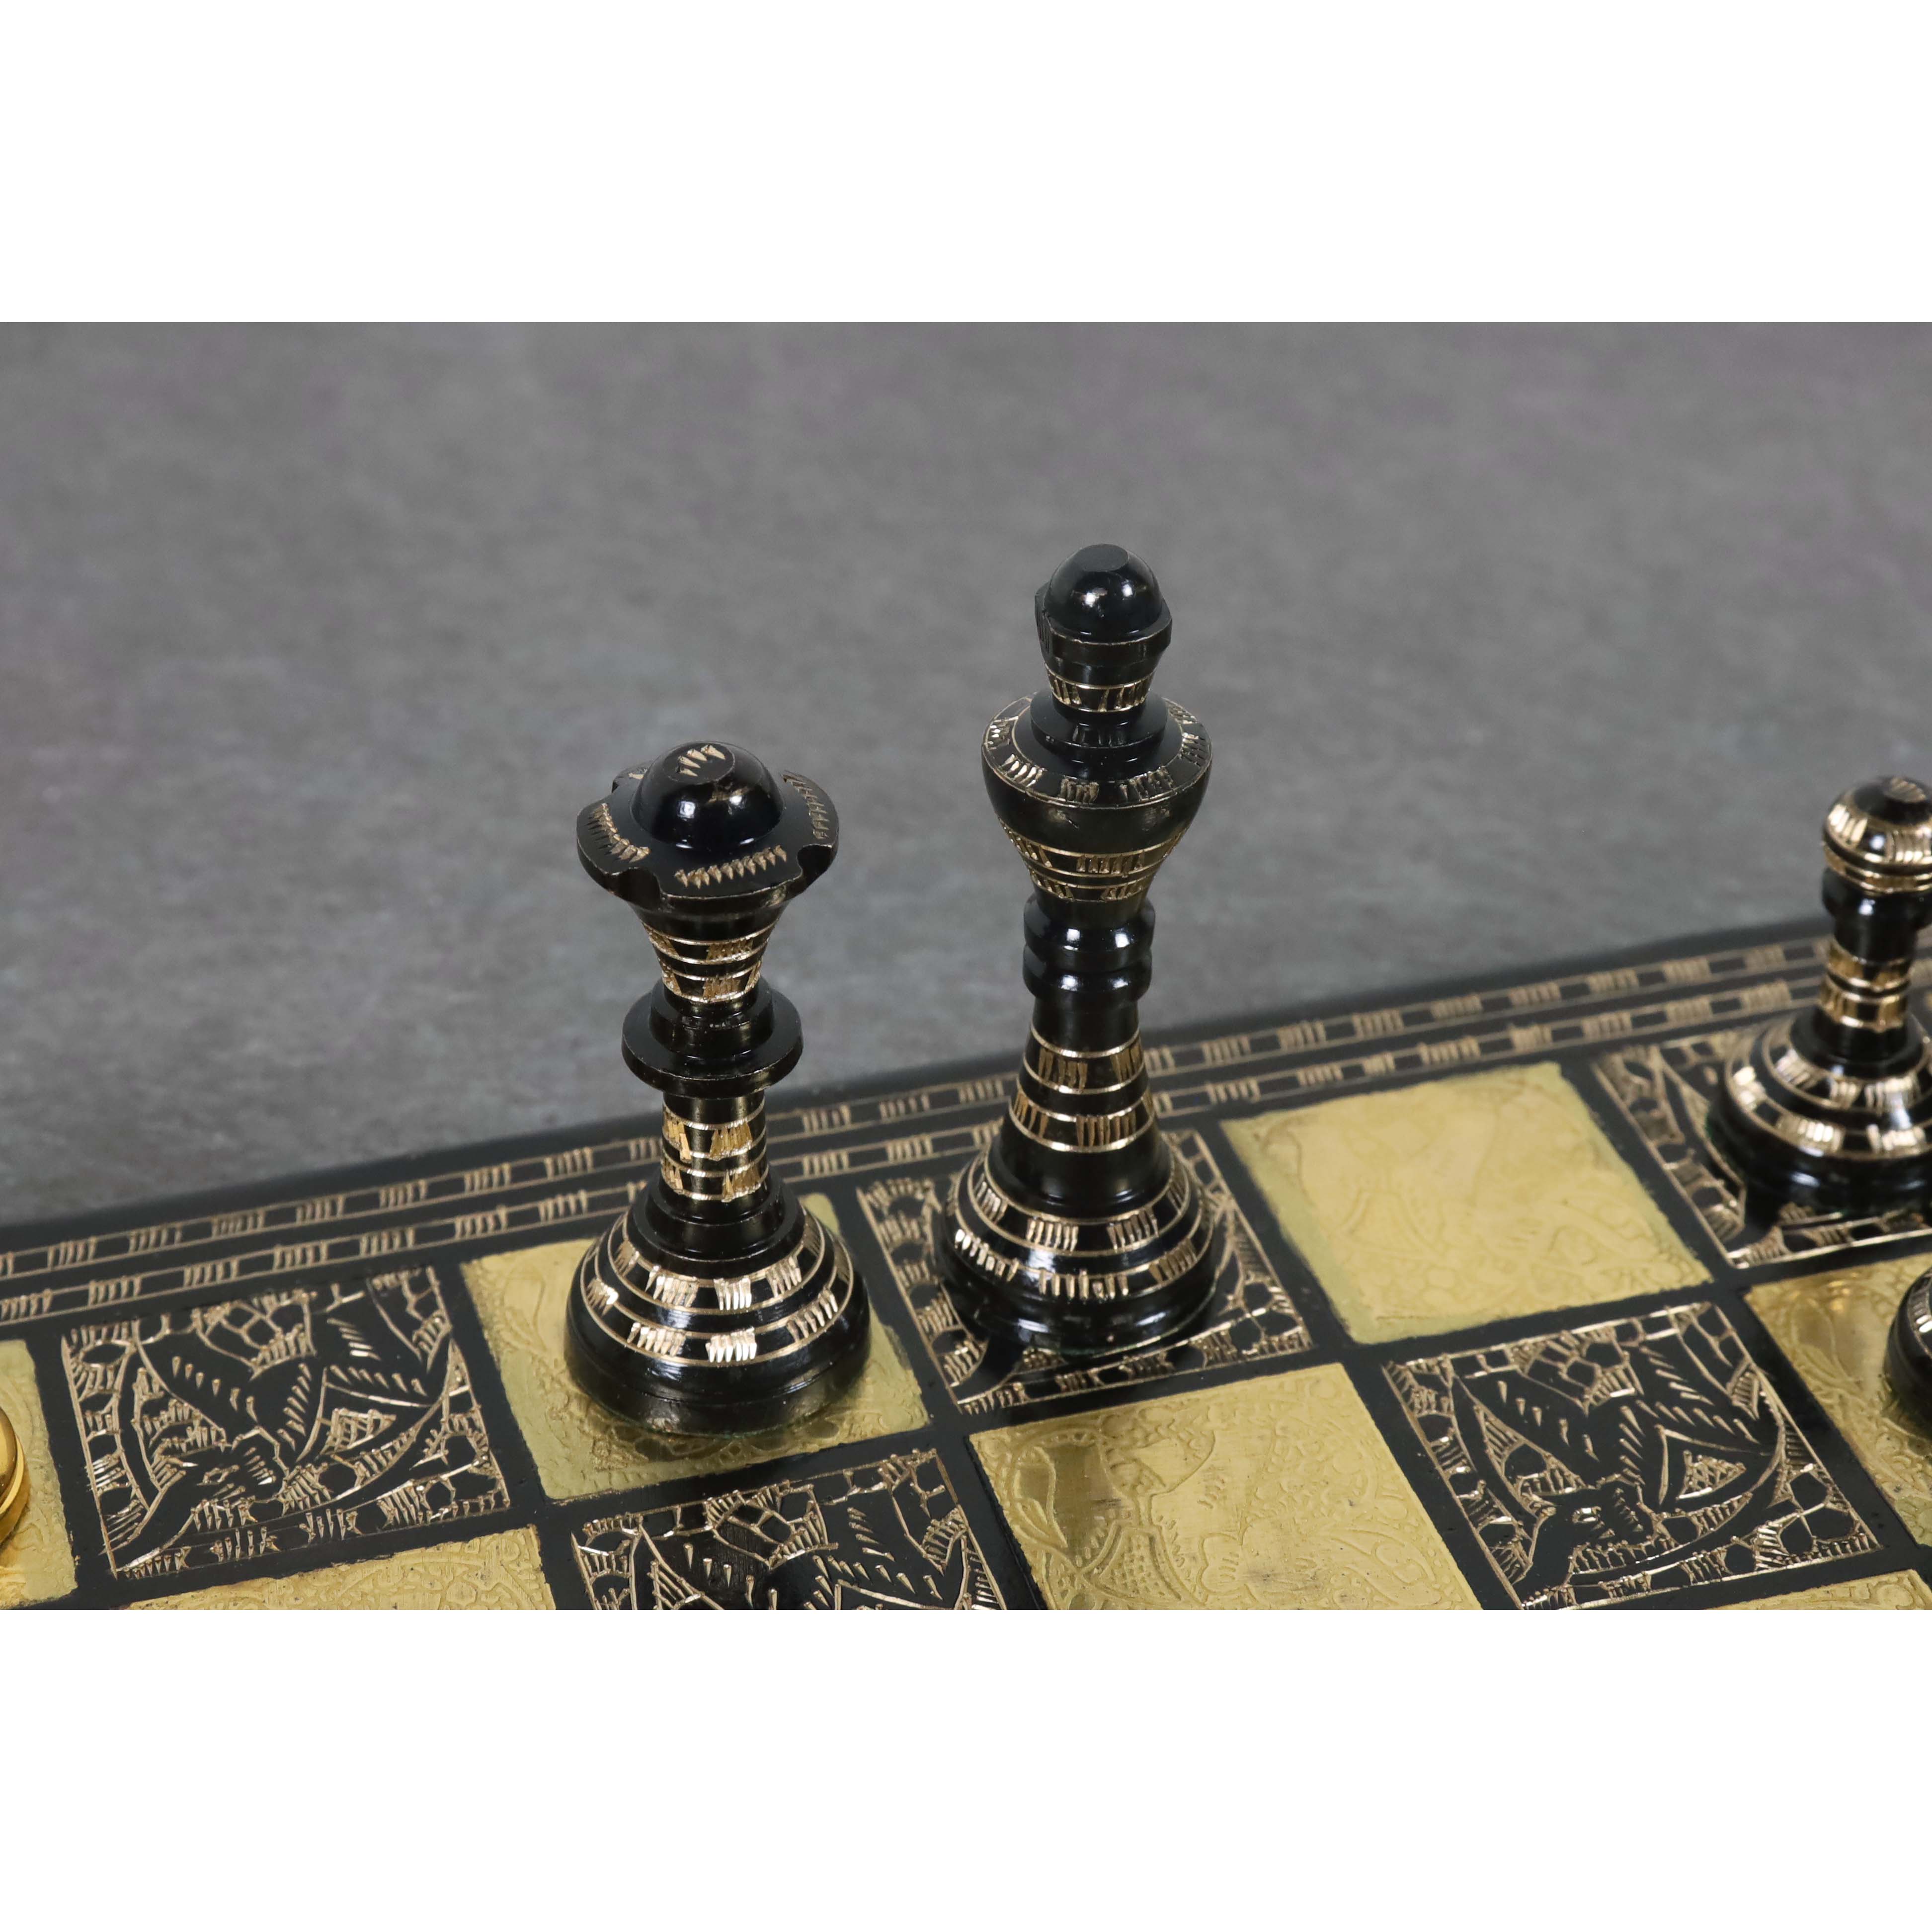 Blackened and Polished Brass Chess Set